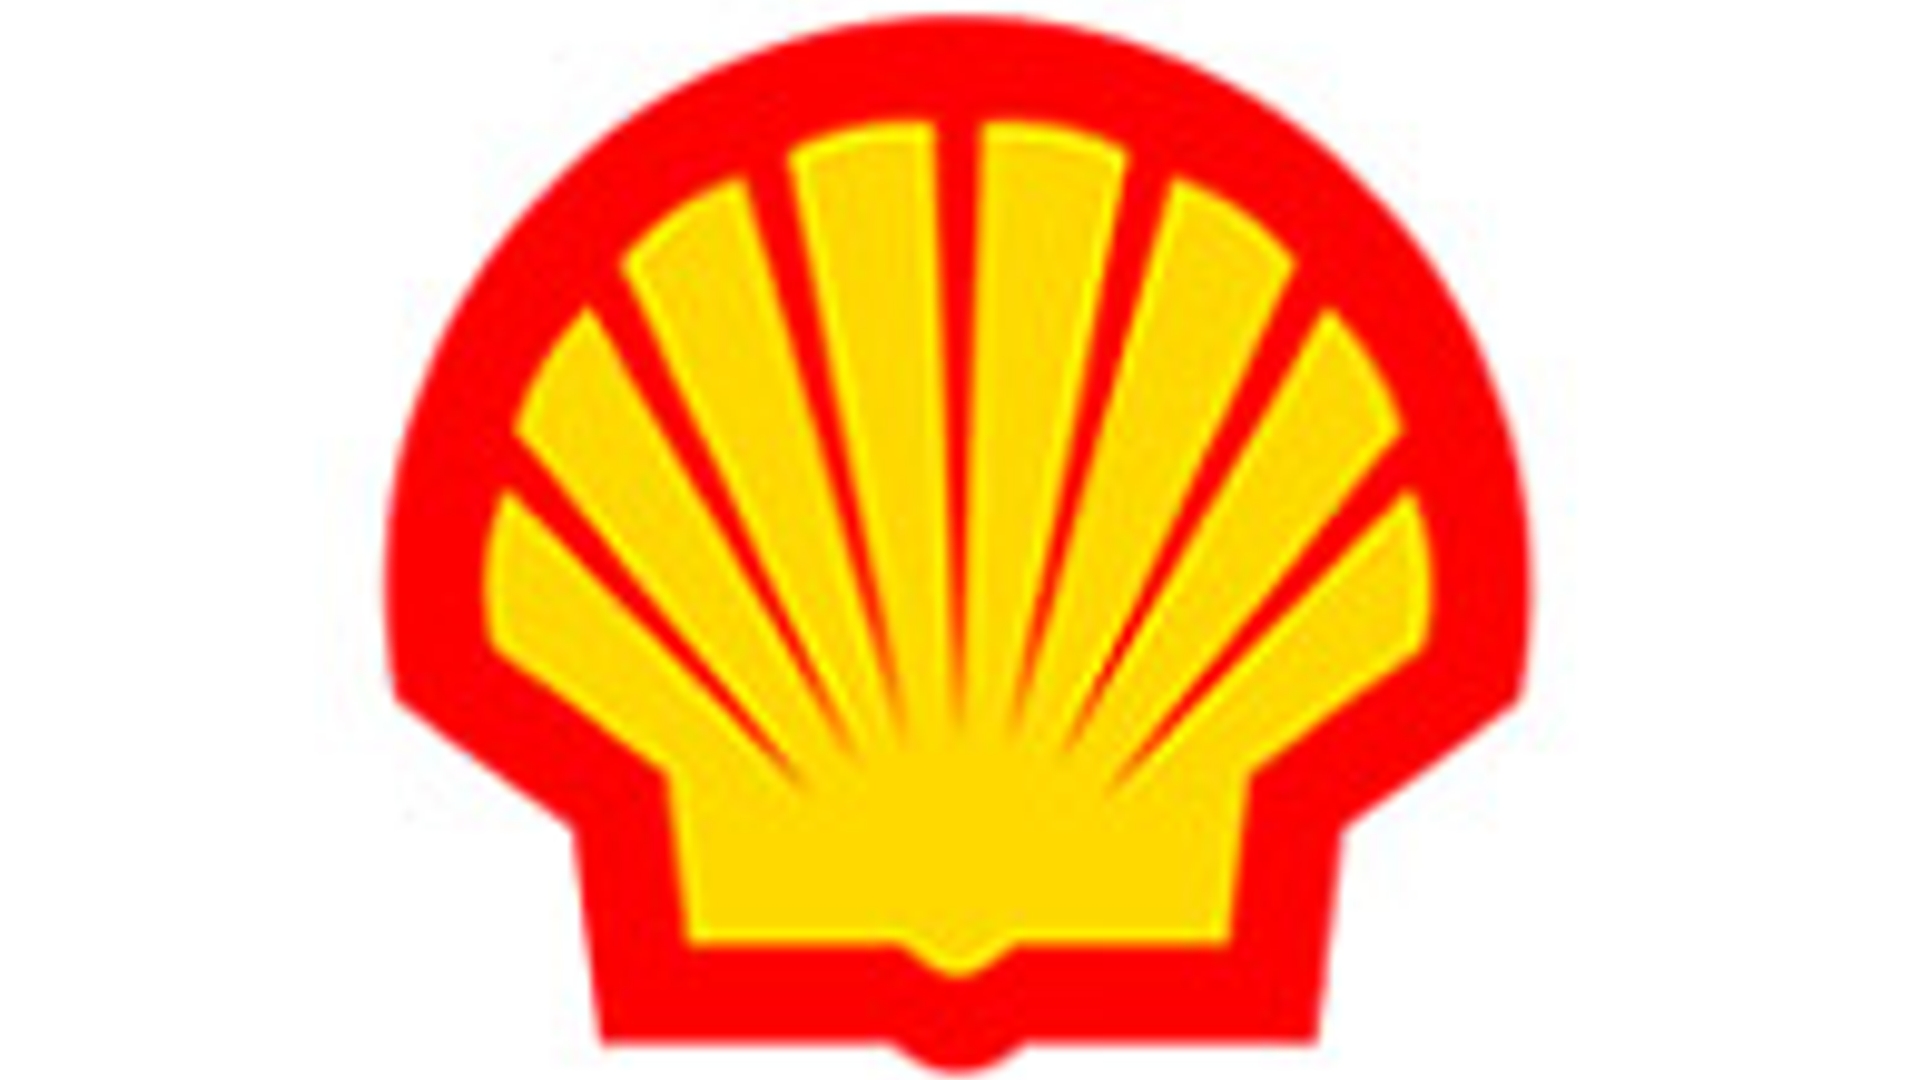 shell_logo_01.jpeg